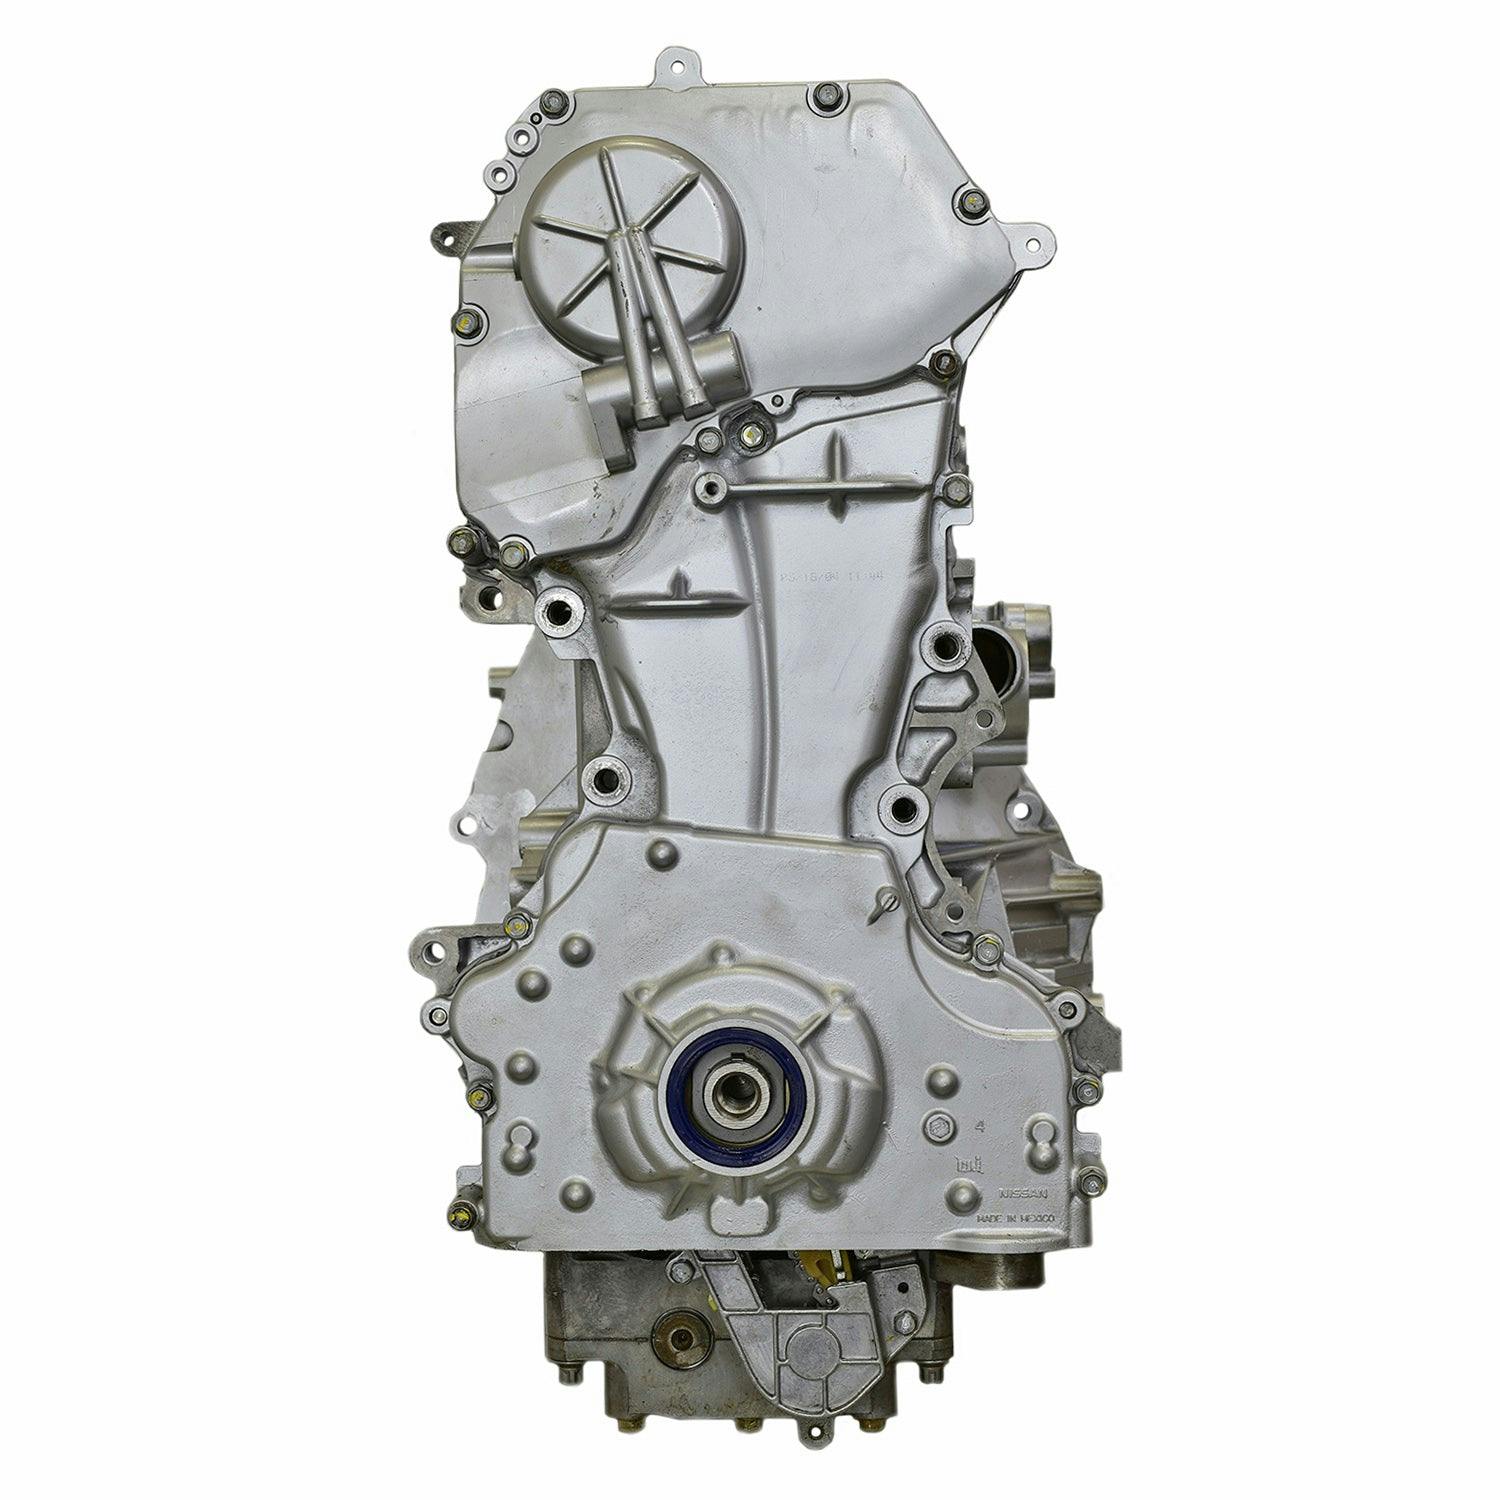 2.5L Inline-4 Engine for 2002-2006 Nissan Altima/Sentra